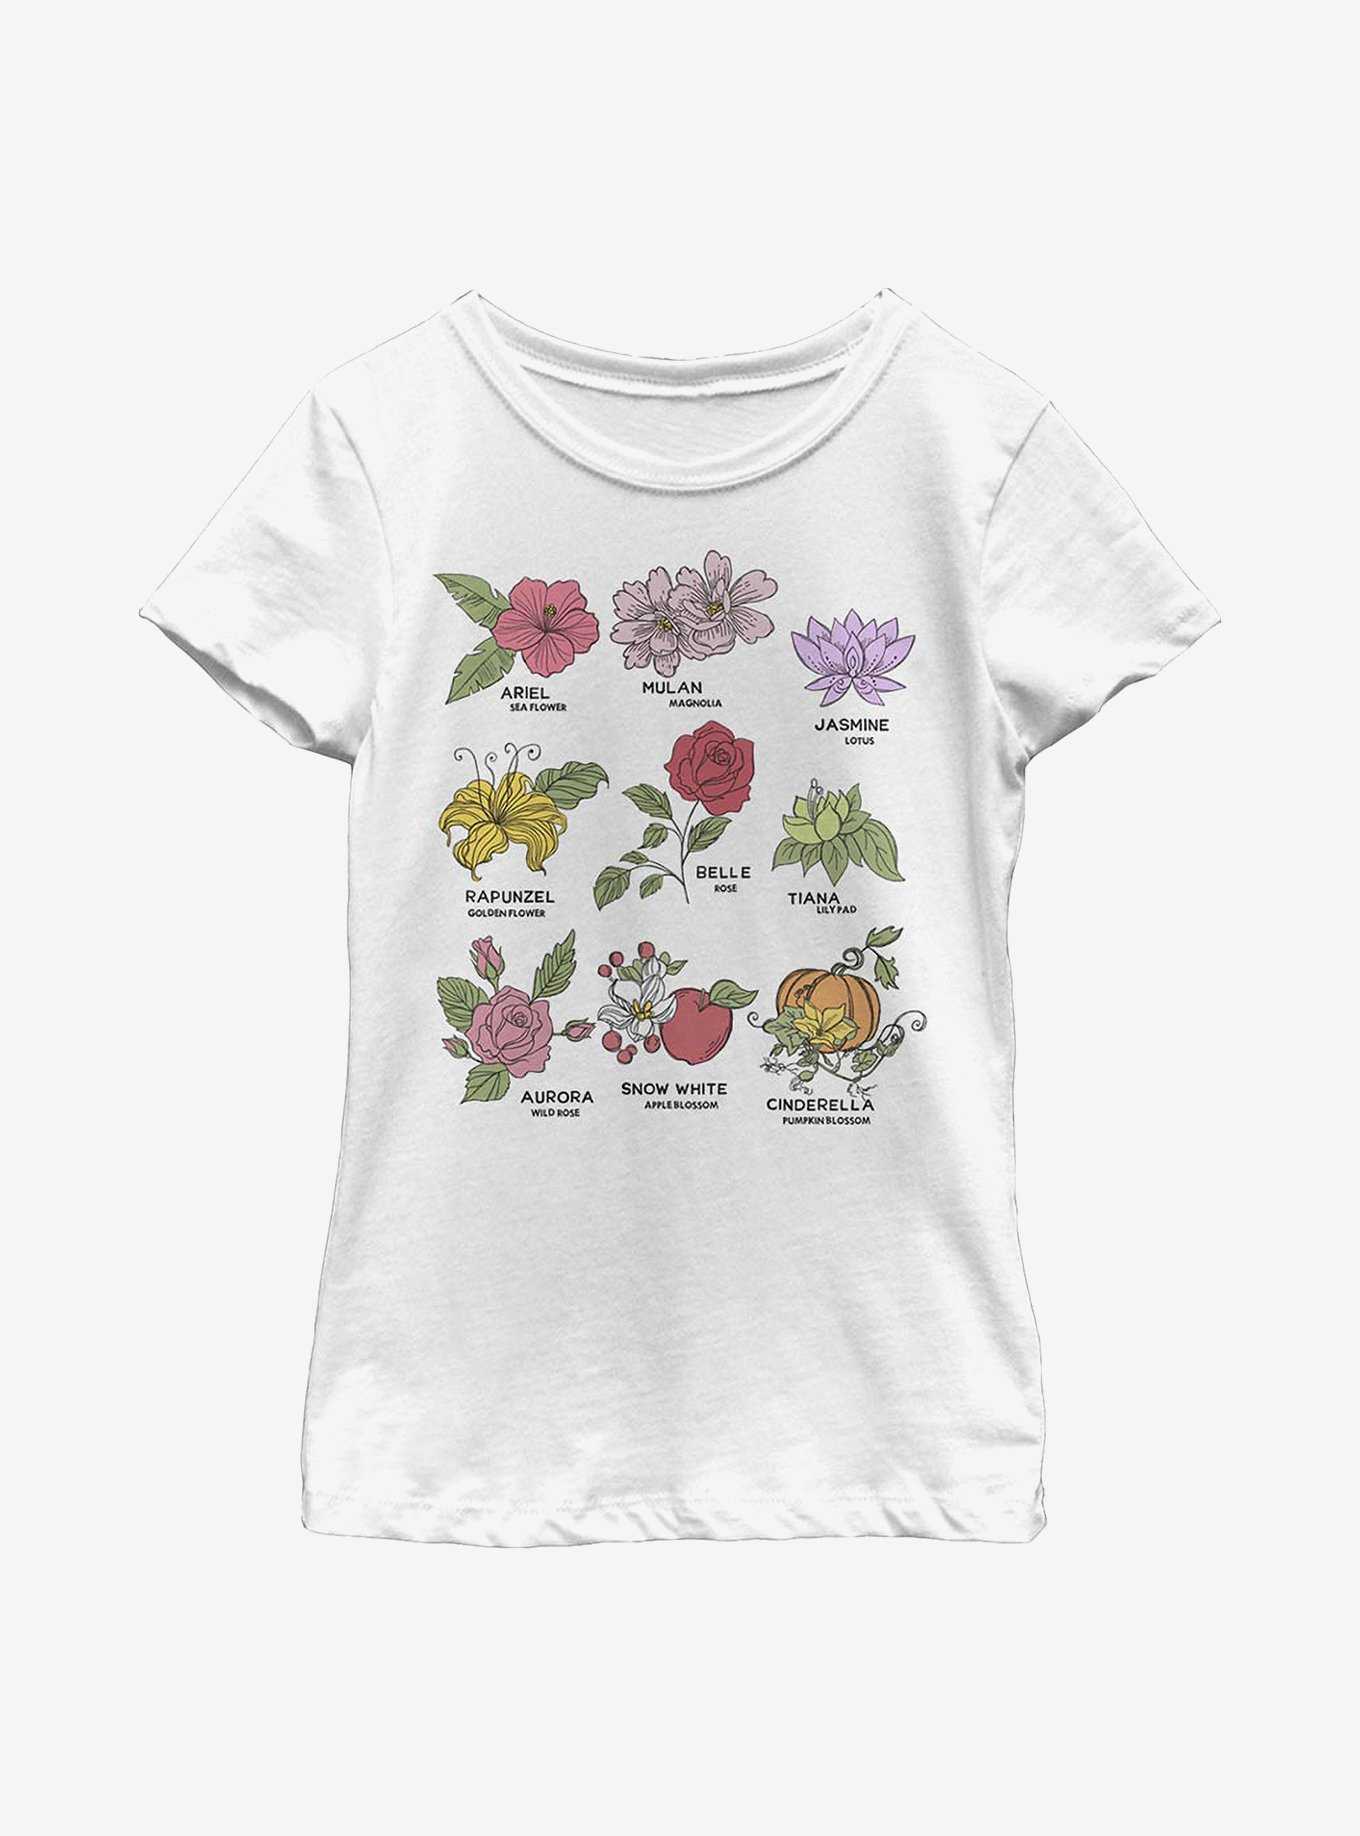 Disney Princesses Royal Flora Youth Girls T-Shirt, , hi-res